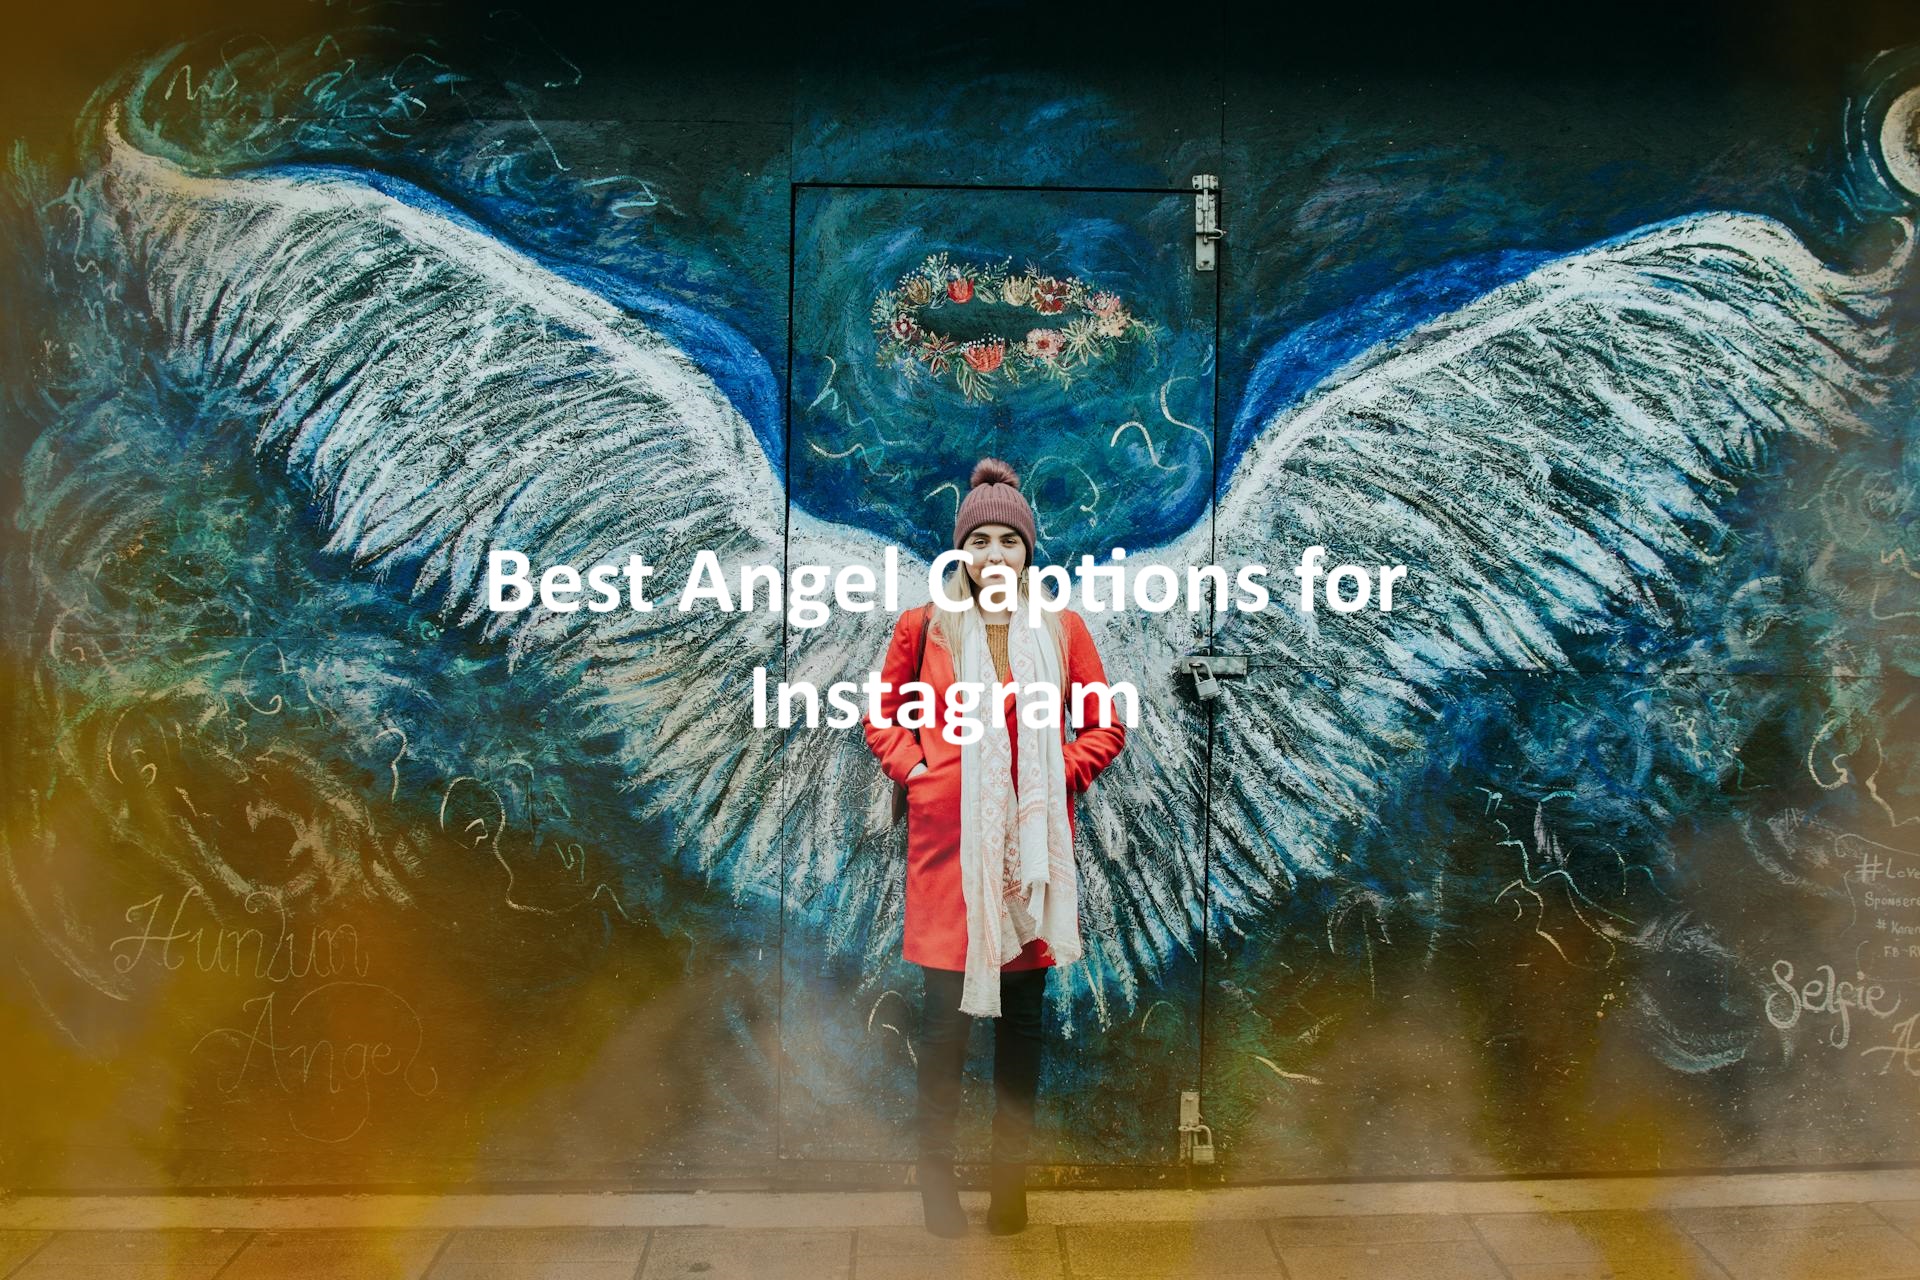 Angel Captions for Instagram